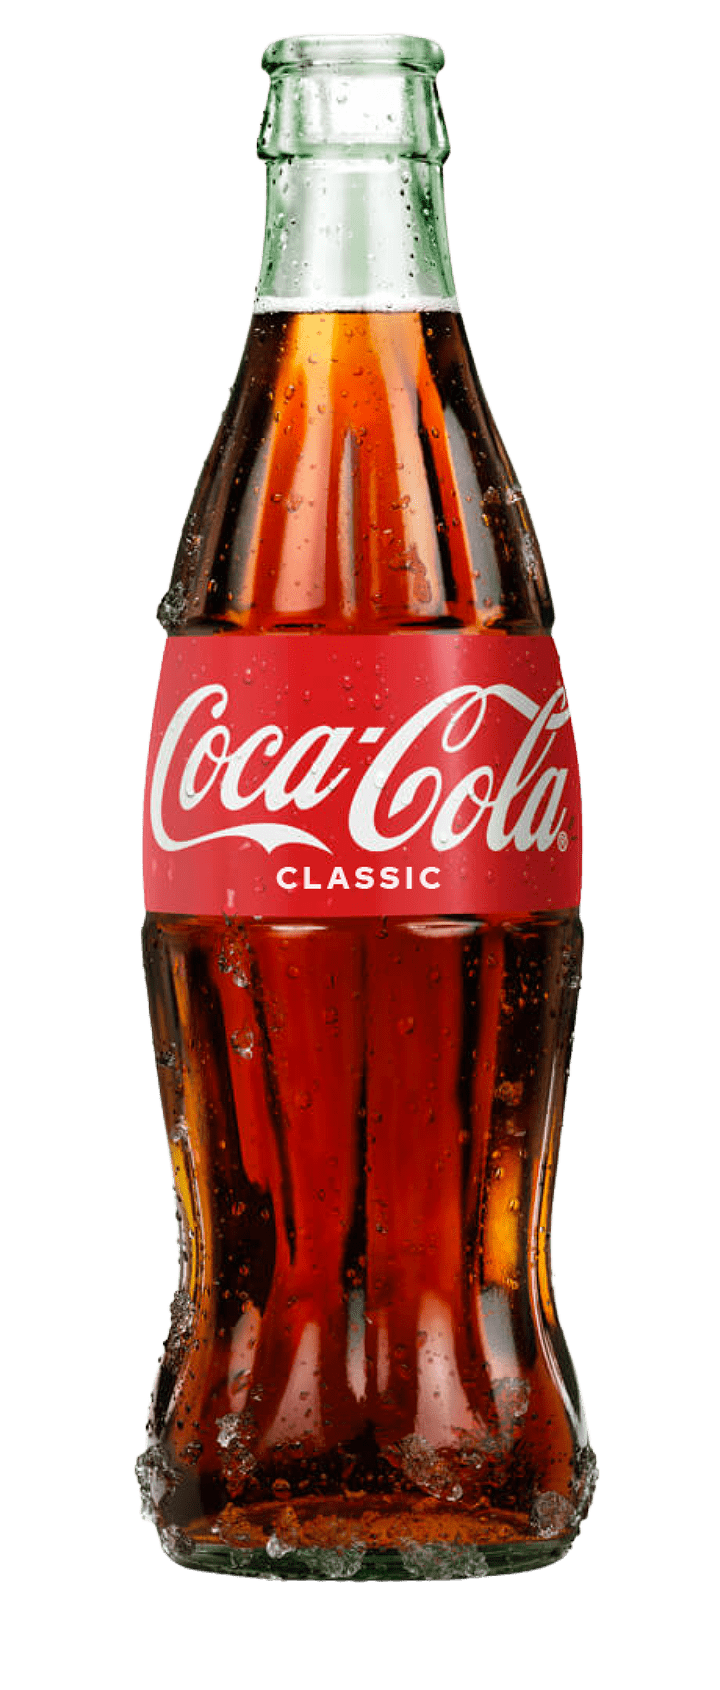 A For Moment | Coca-Cola